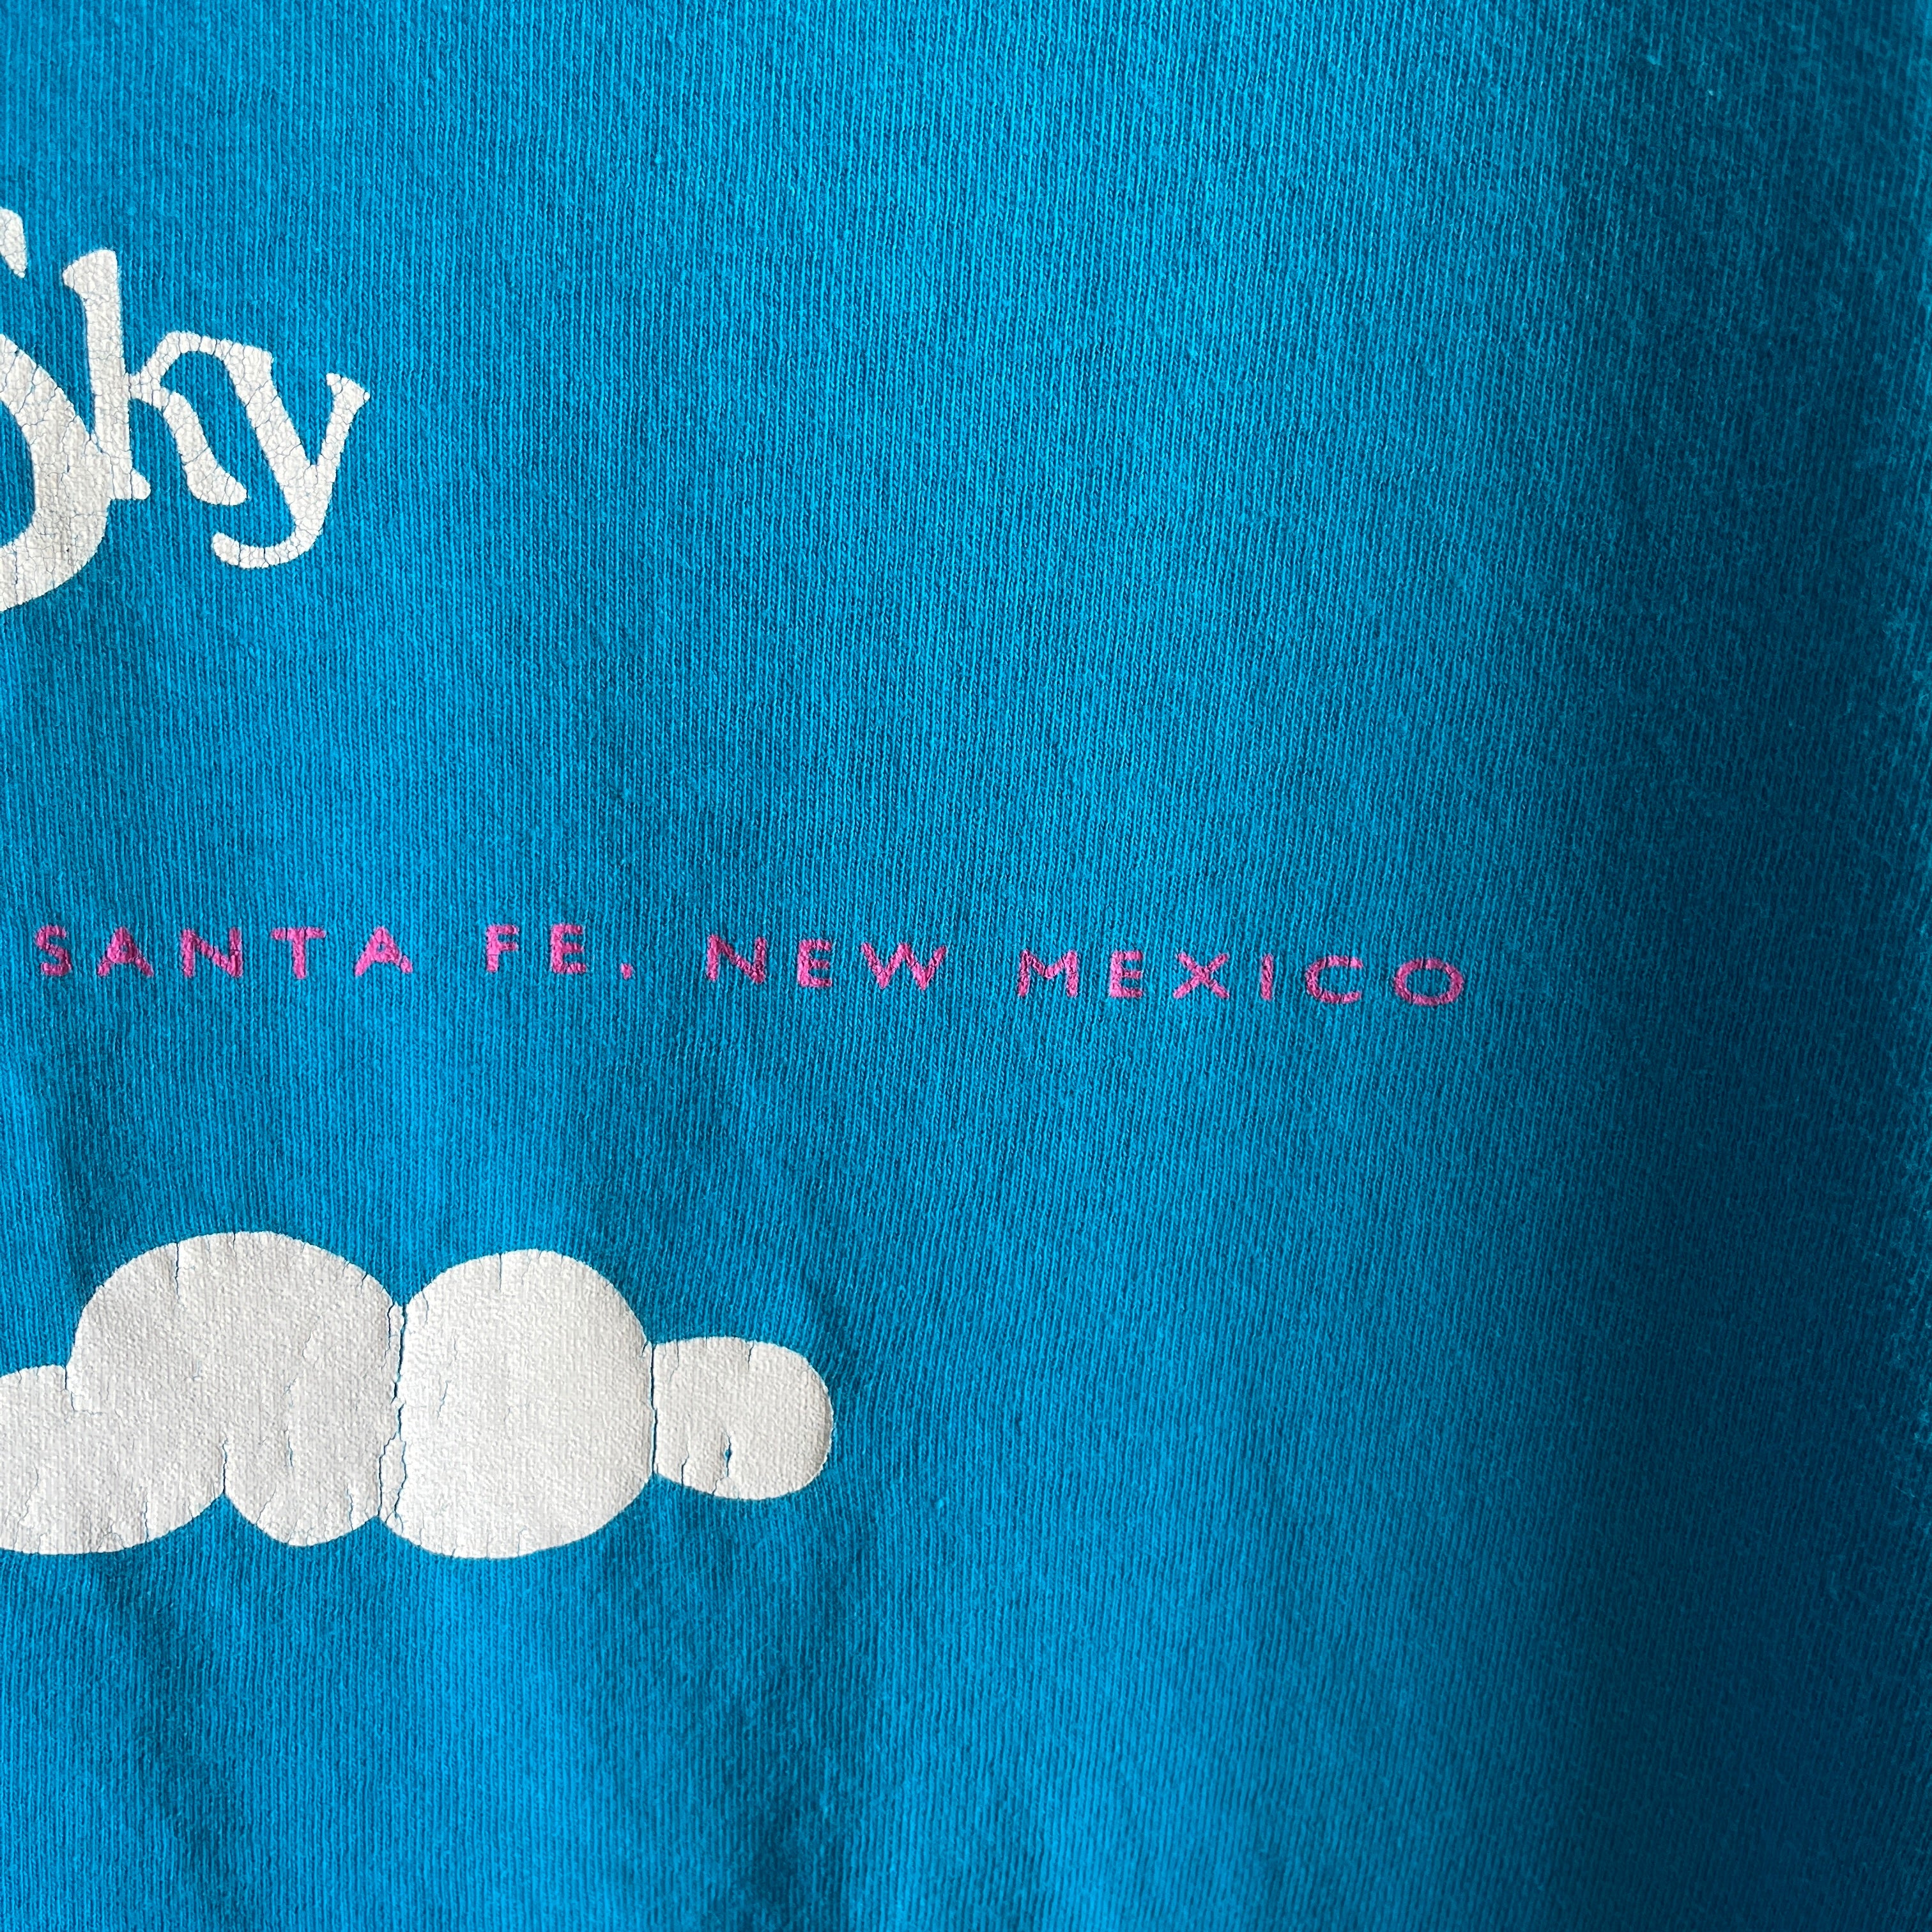 1990s Blue SKy Soda T-Shirt - Who Remembers?